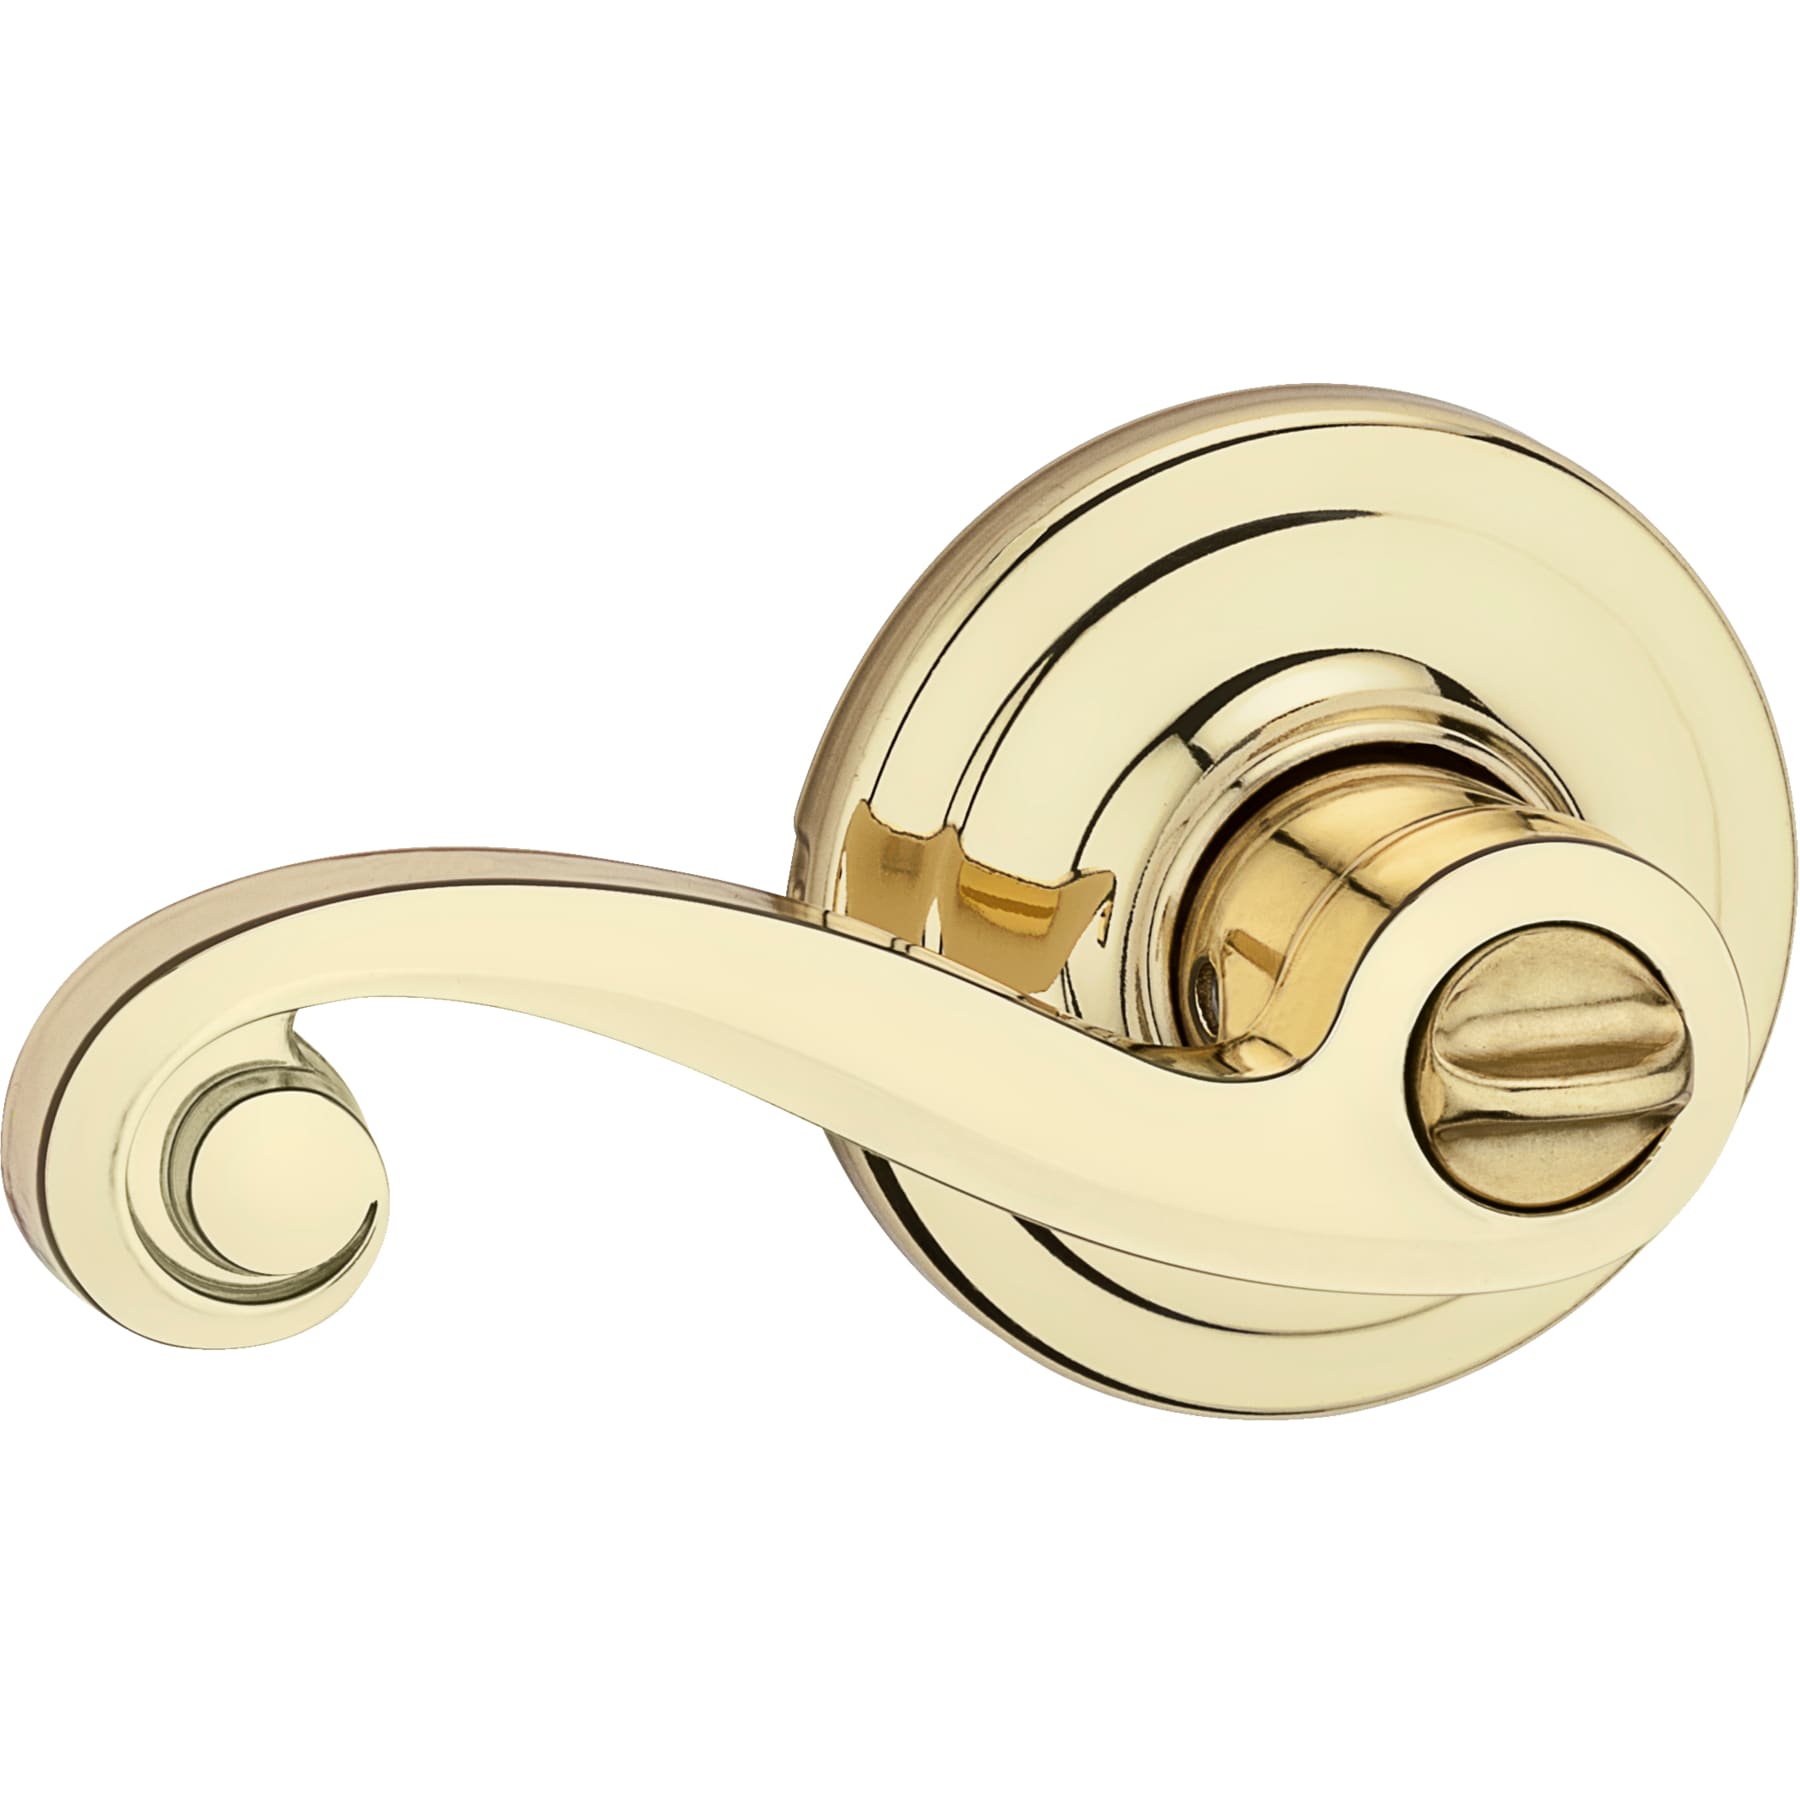 Door handle - Polished unlacquered brass - Model 705 - CC 187 mm